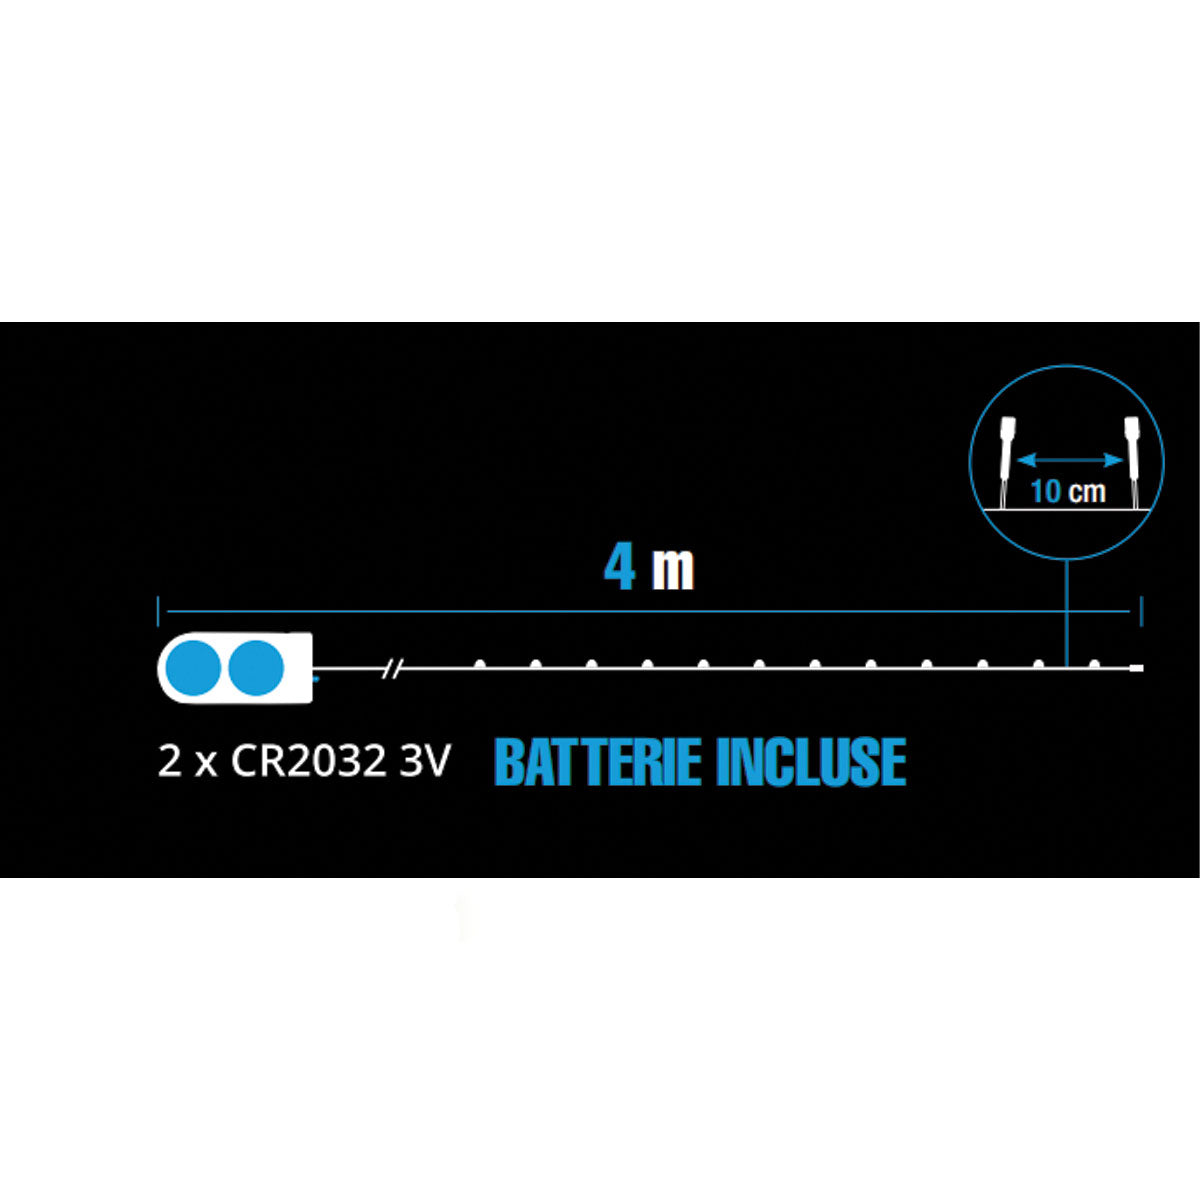 40 Microled Slim Battery 4M Uso Interno